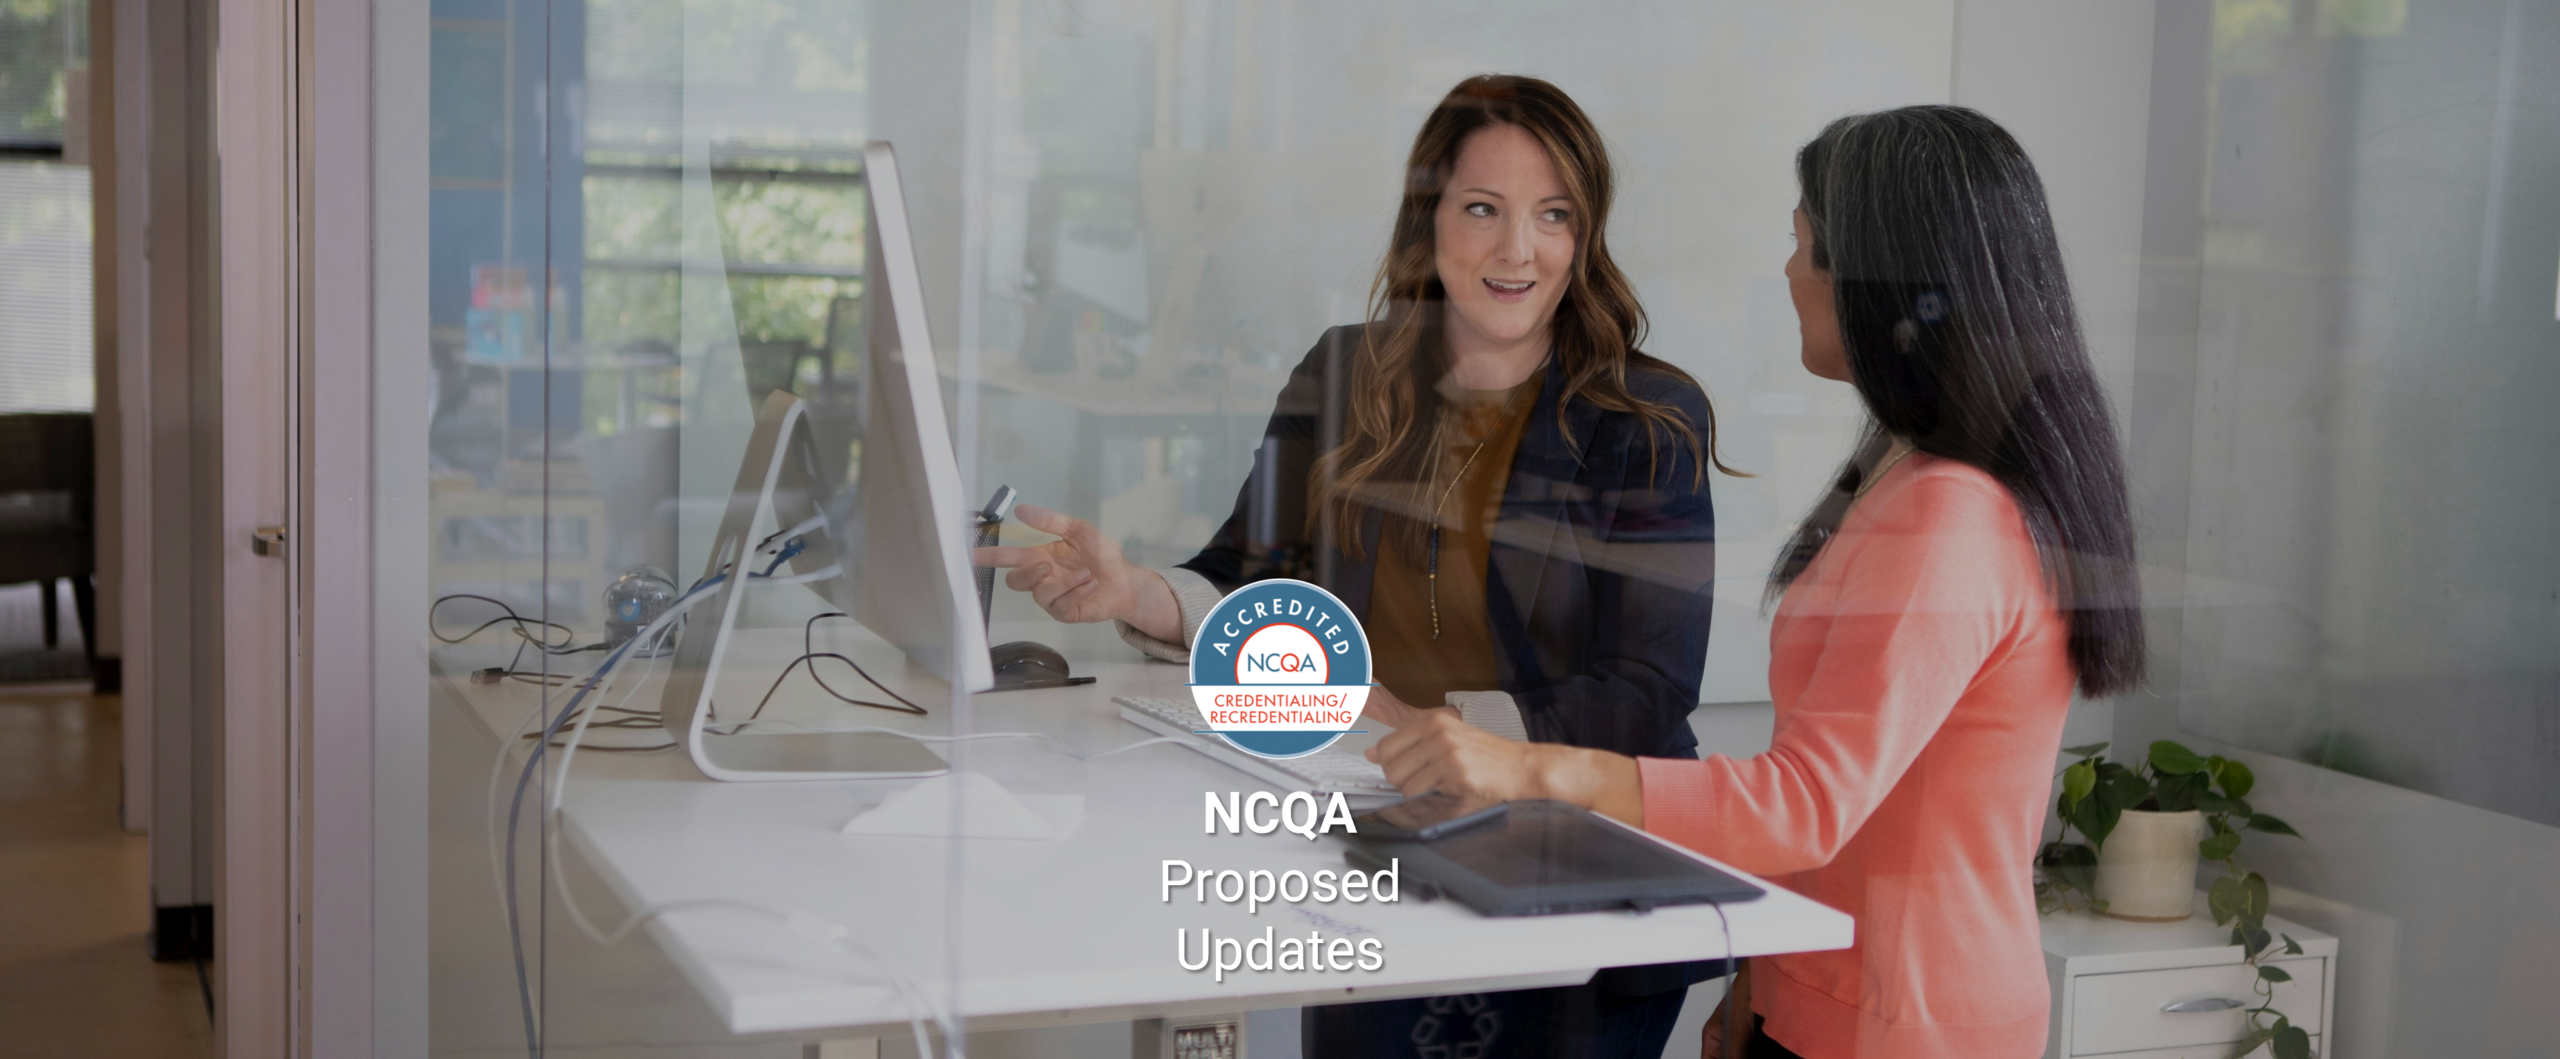 NCQA Credentialing Accredited Updates